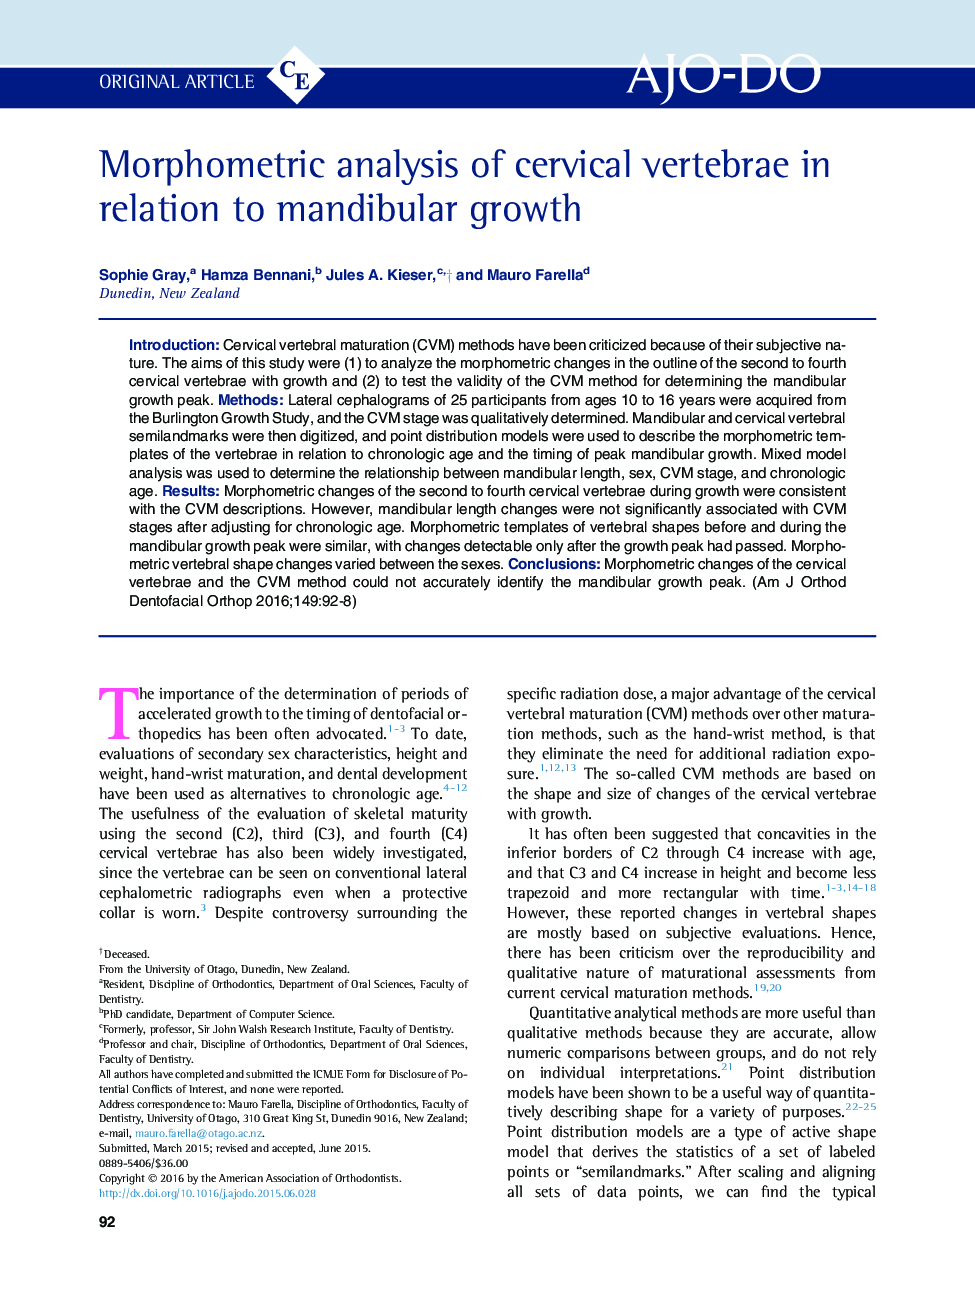 Morphometric analysis of cervical vertebrae in relation to mandibular growth 